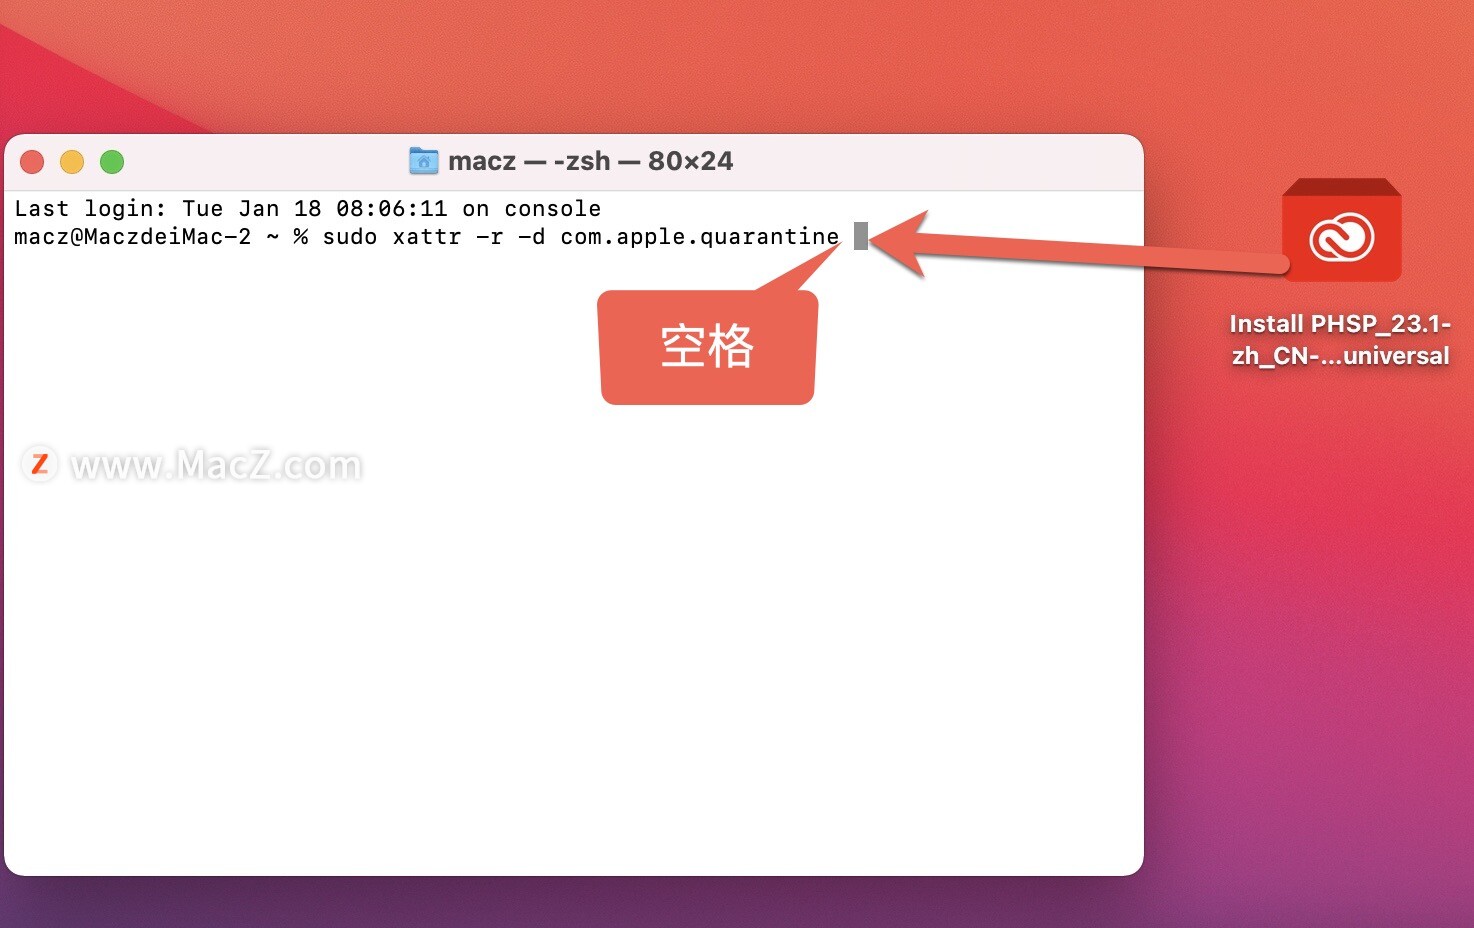 pr 2022中文版-Premiere Pro 2022 for Mac(pr 2022)- Mac下载插图4